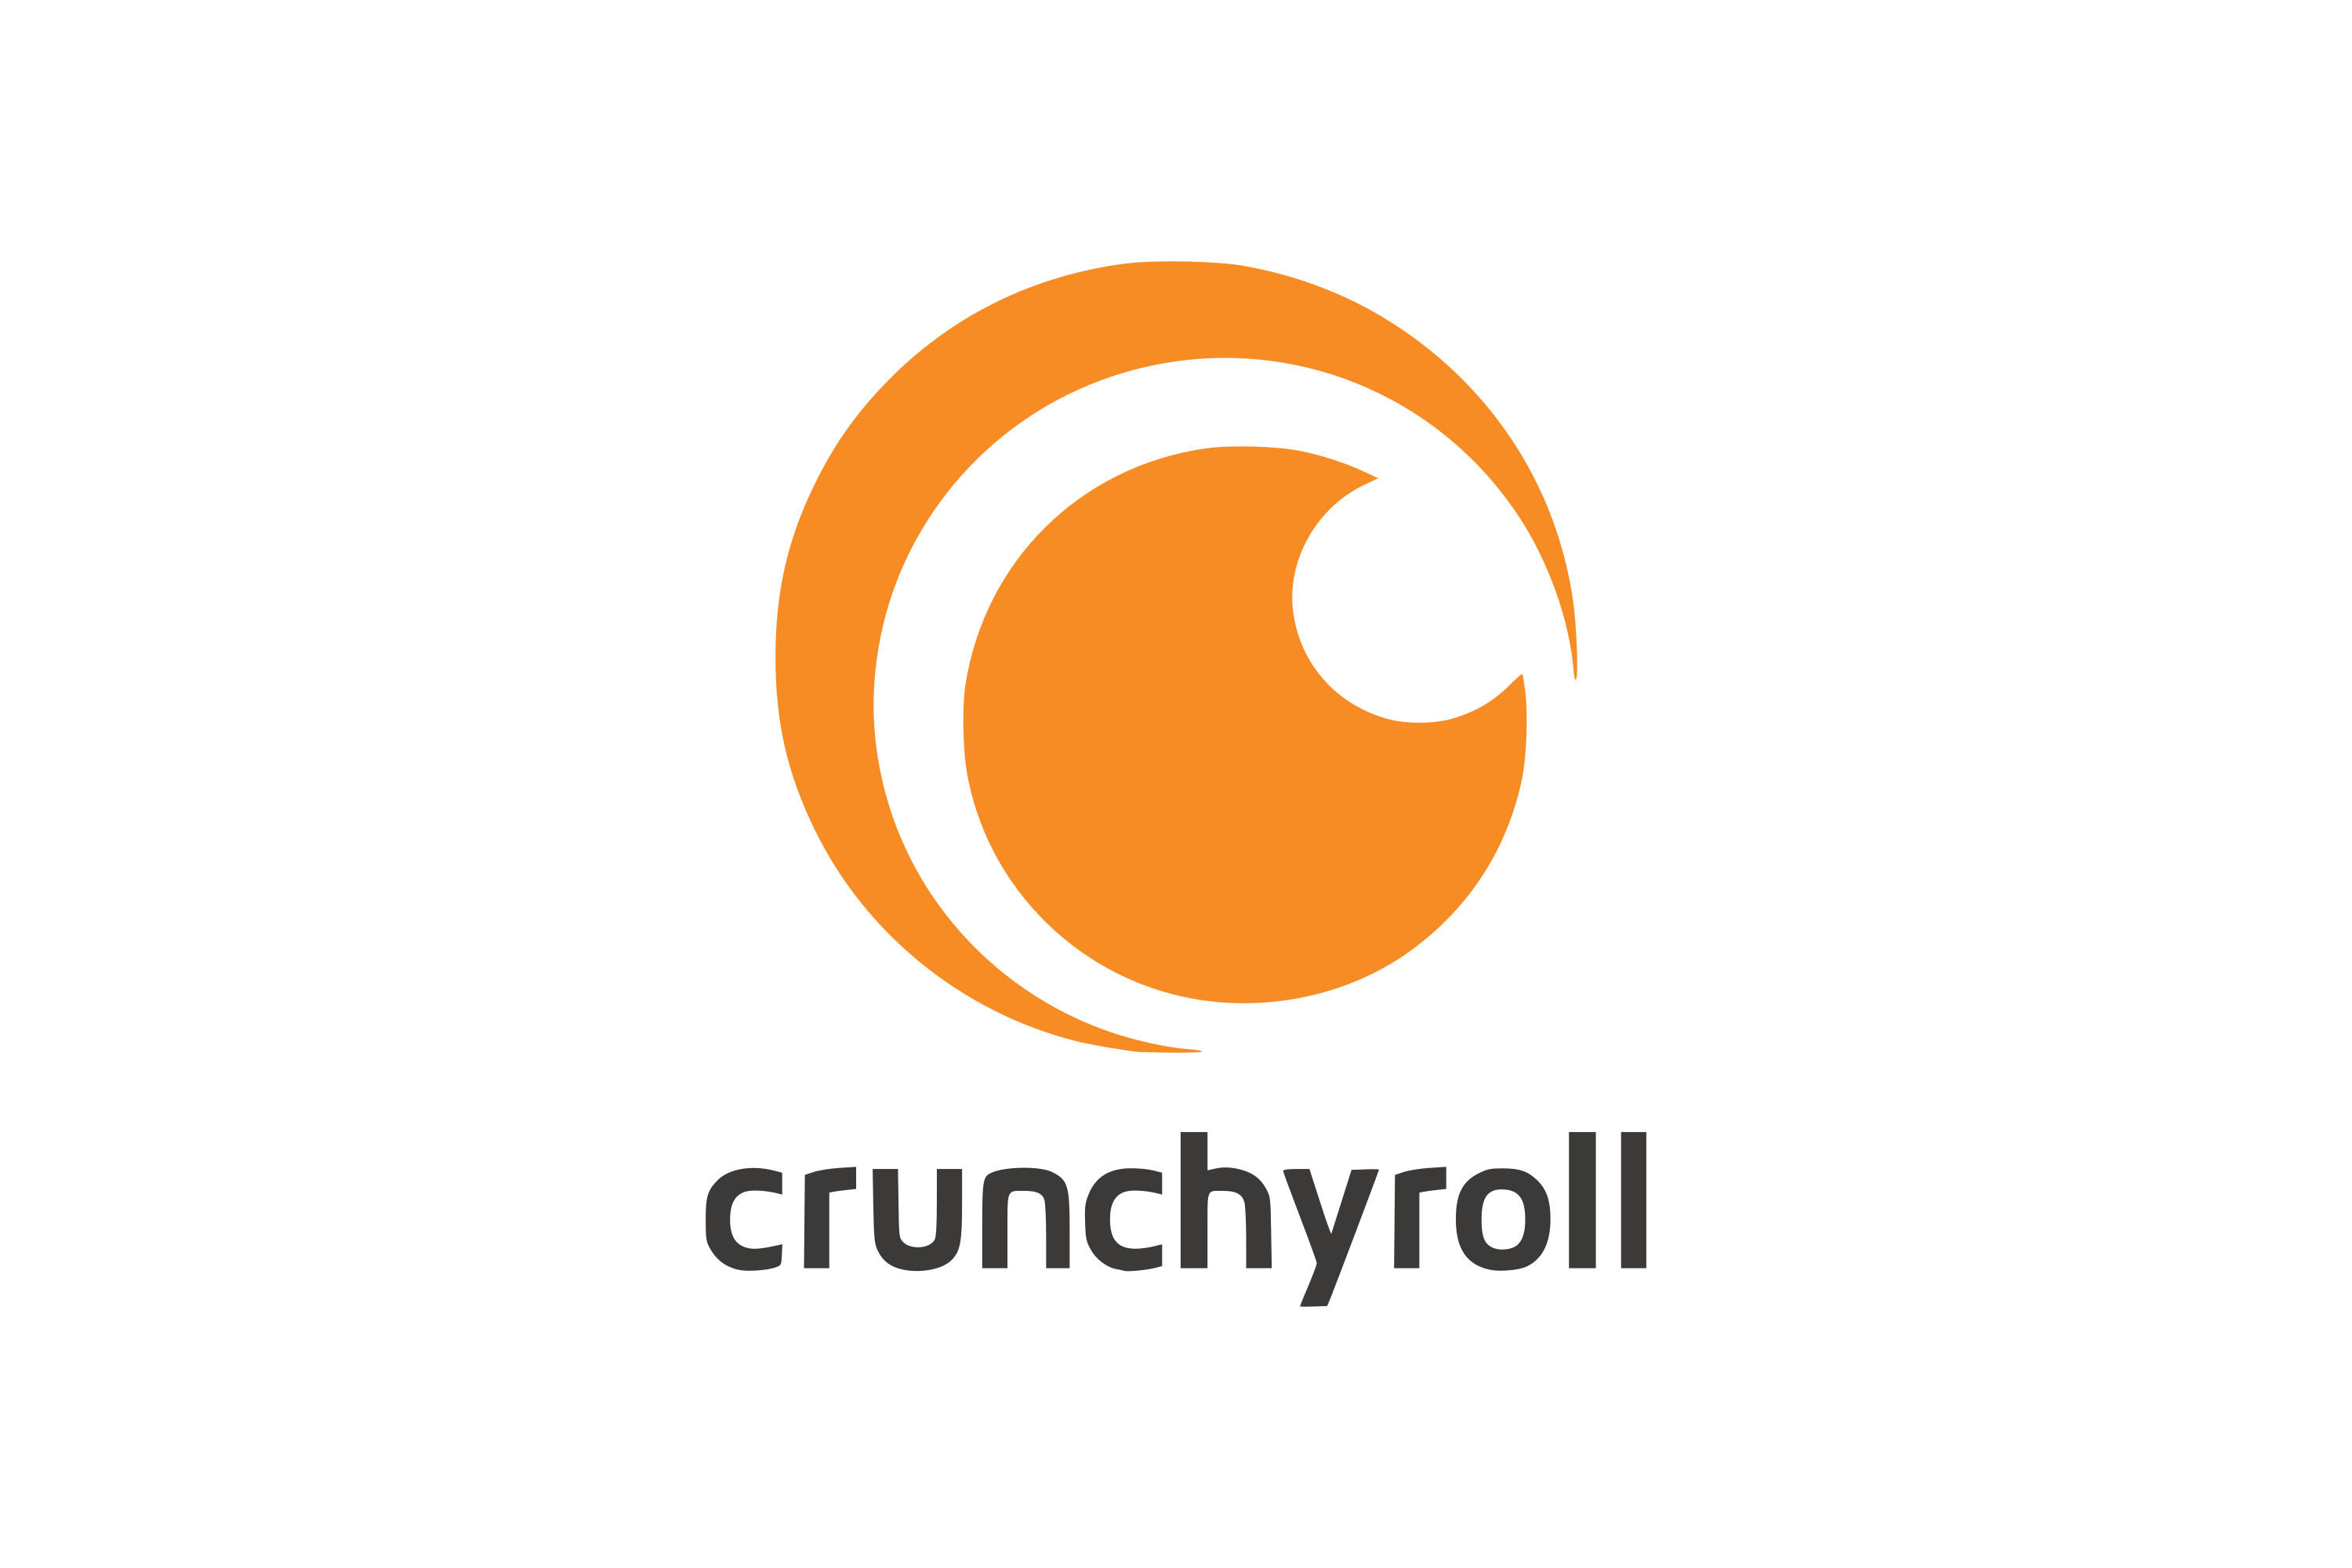 food wars crunchyroll download free